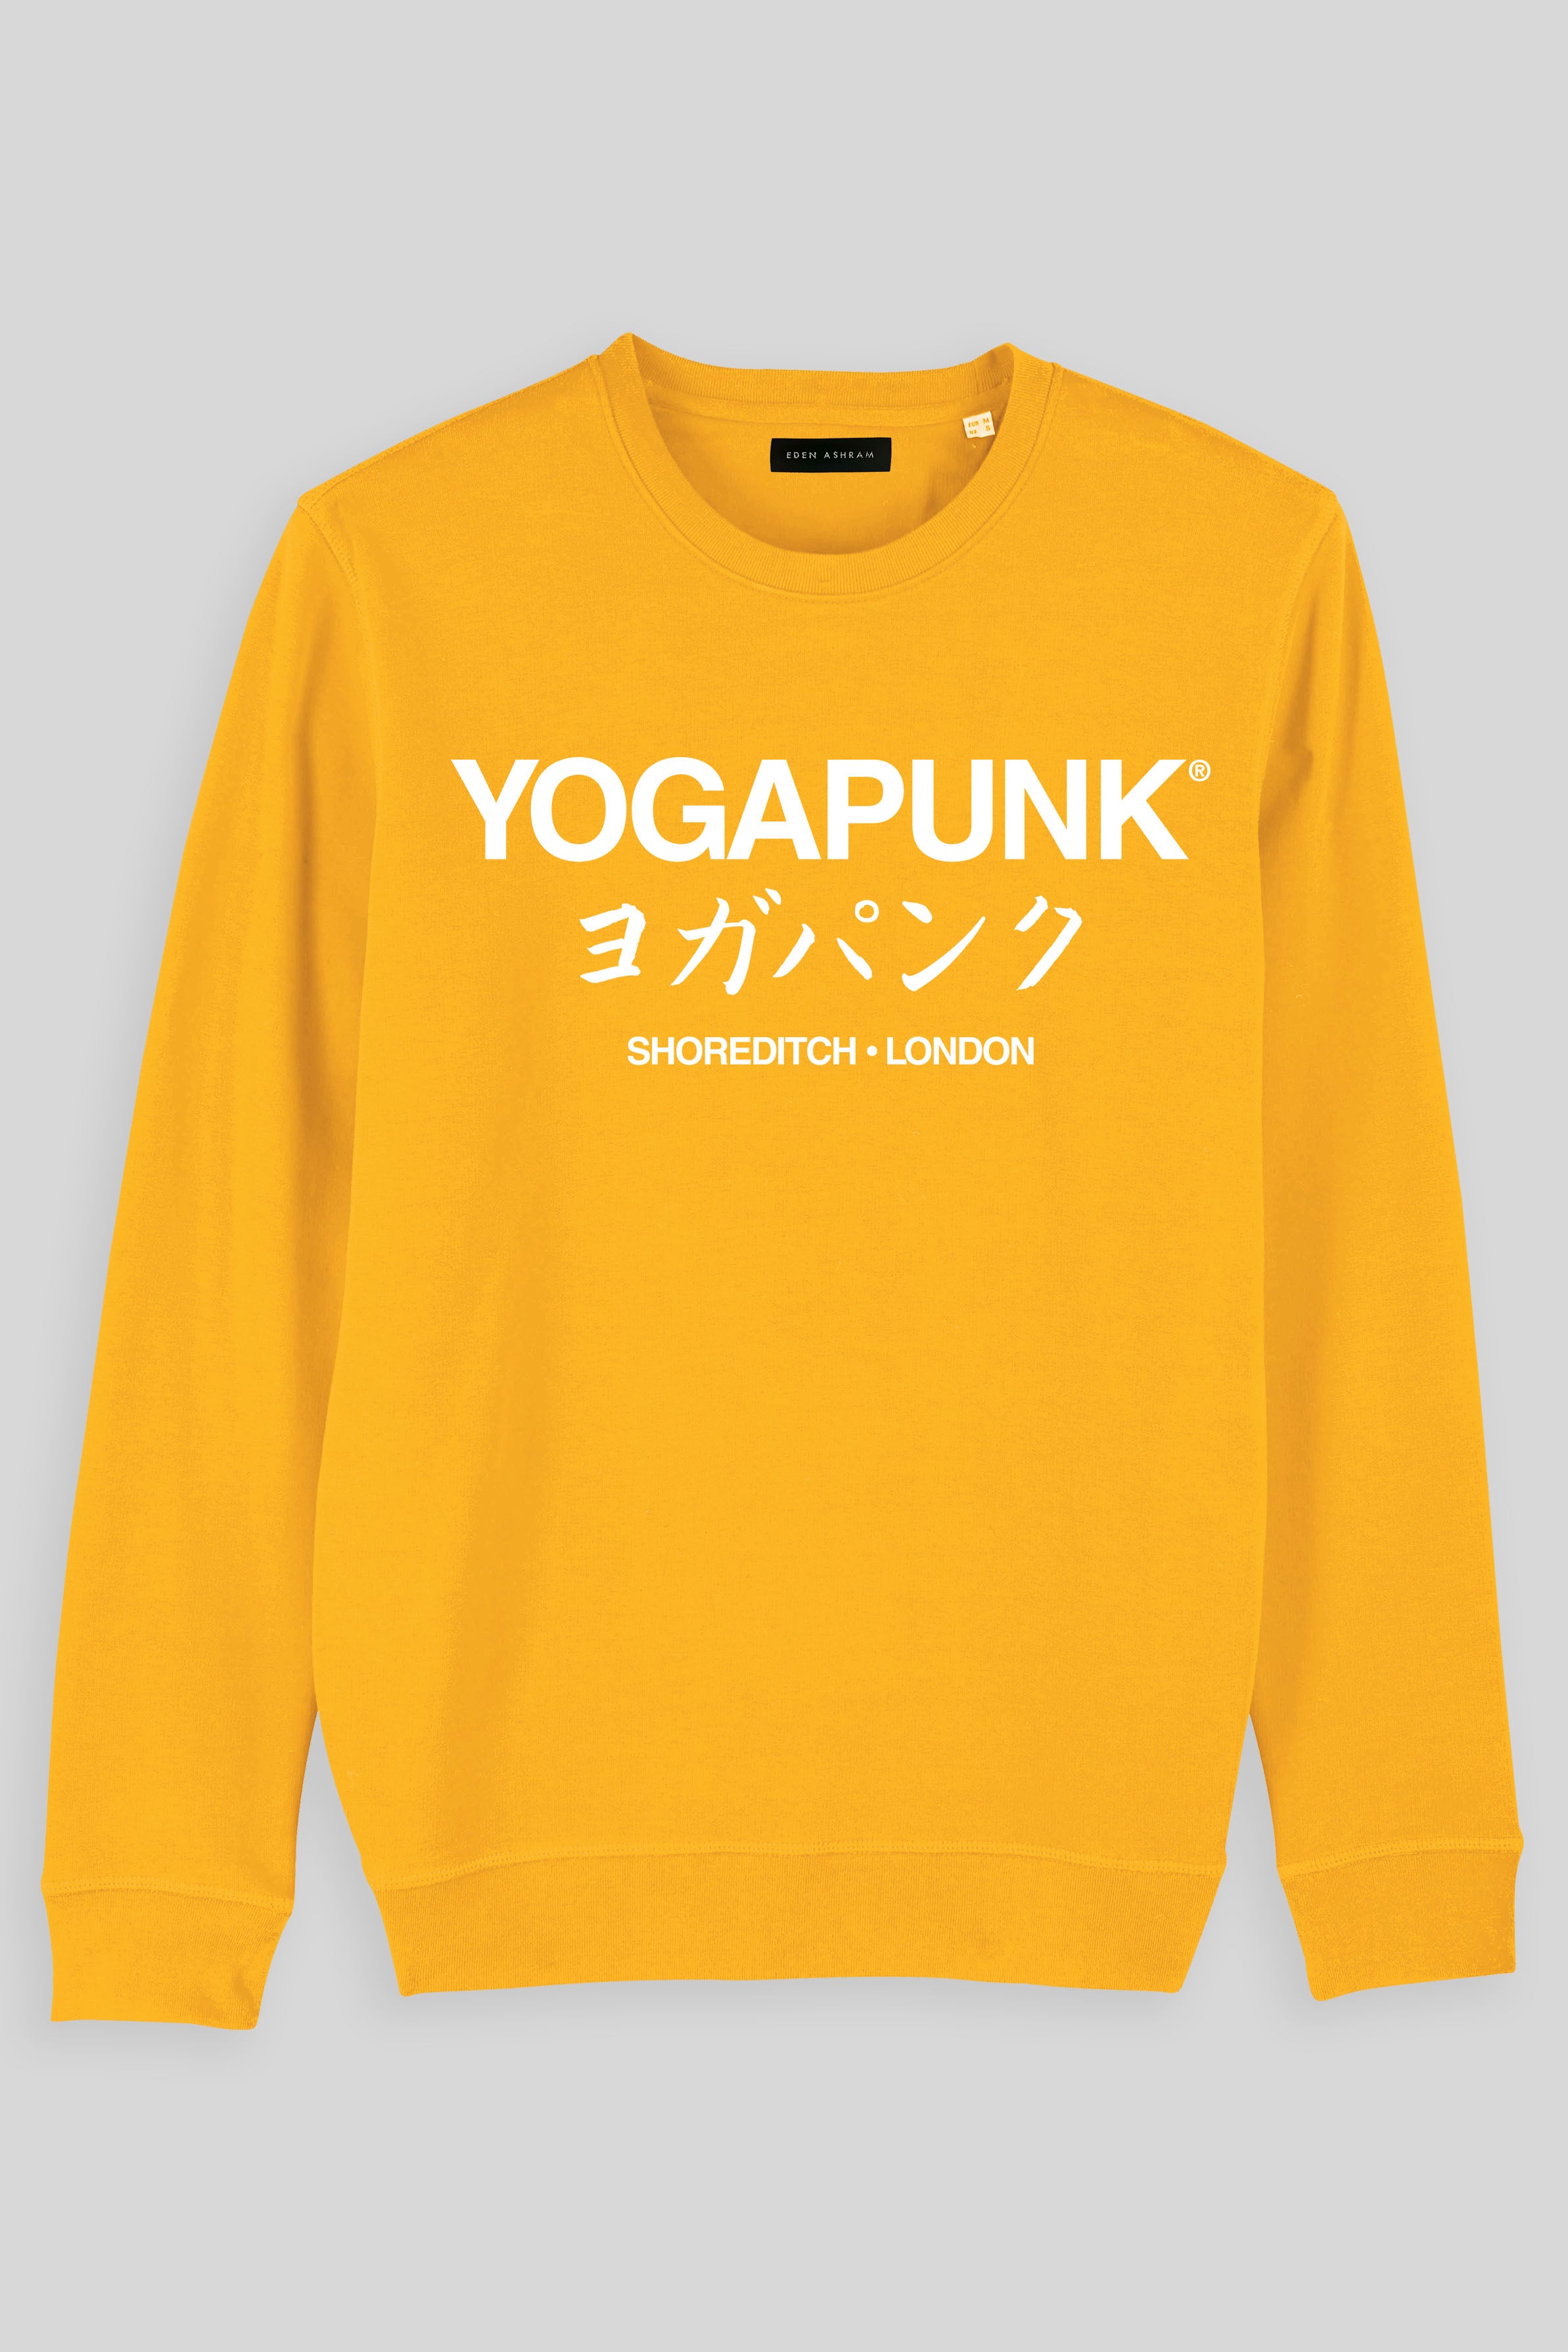 Eden Ashram Yoga Punk® Shoreditch Premium Crew Neck Sweatshirt Spectra Yellow